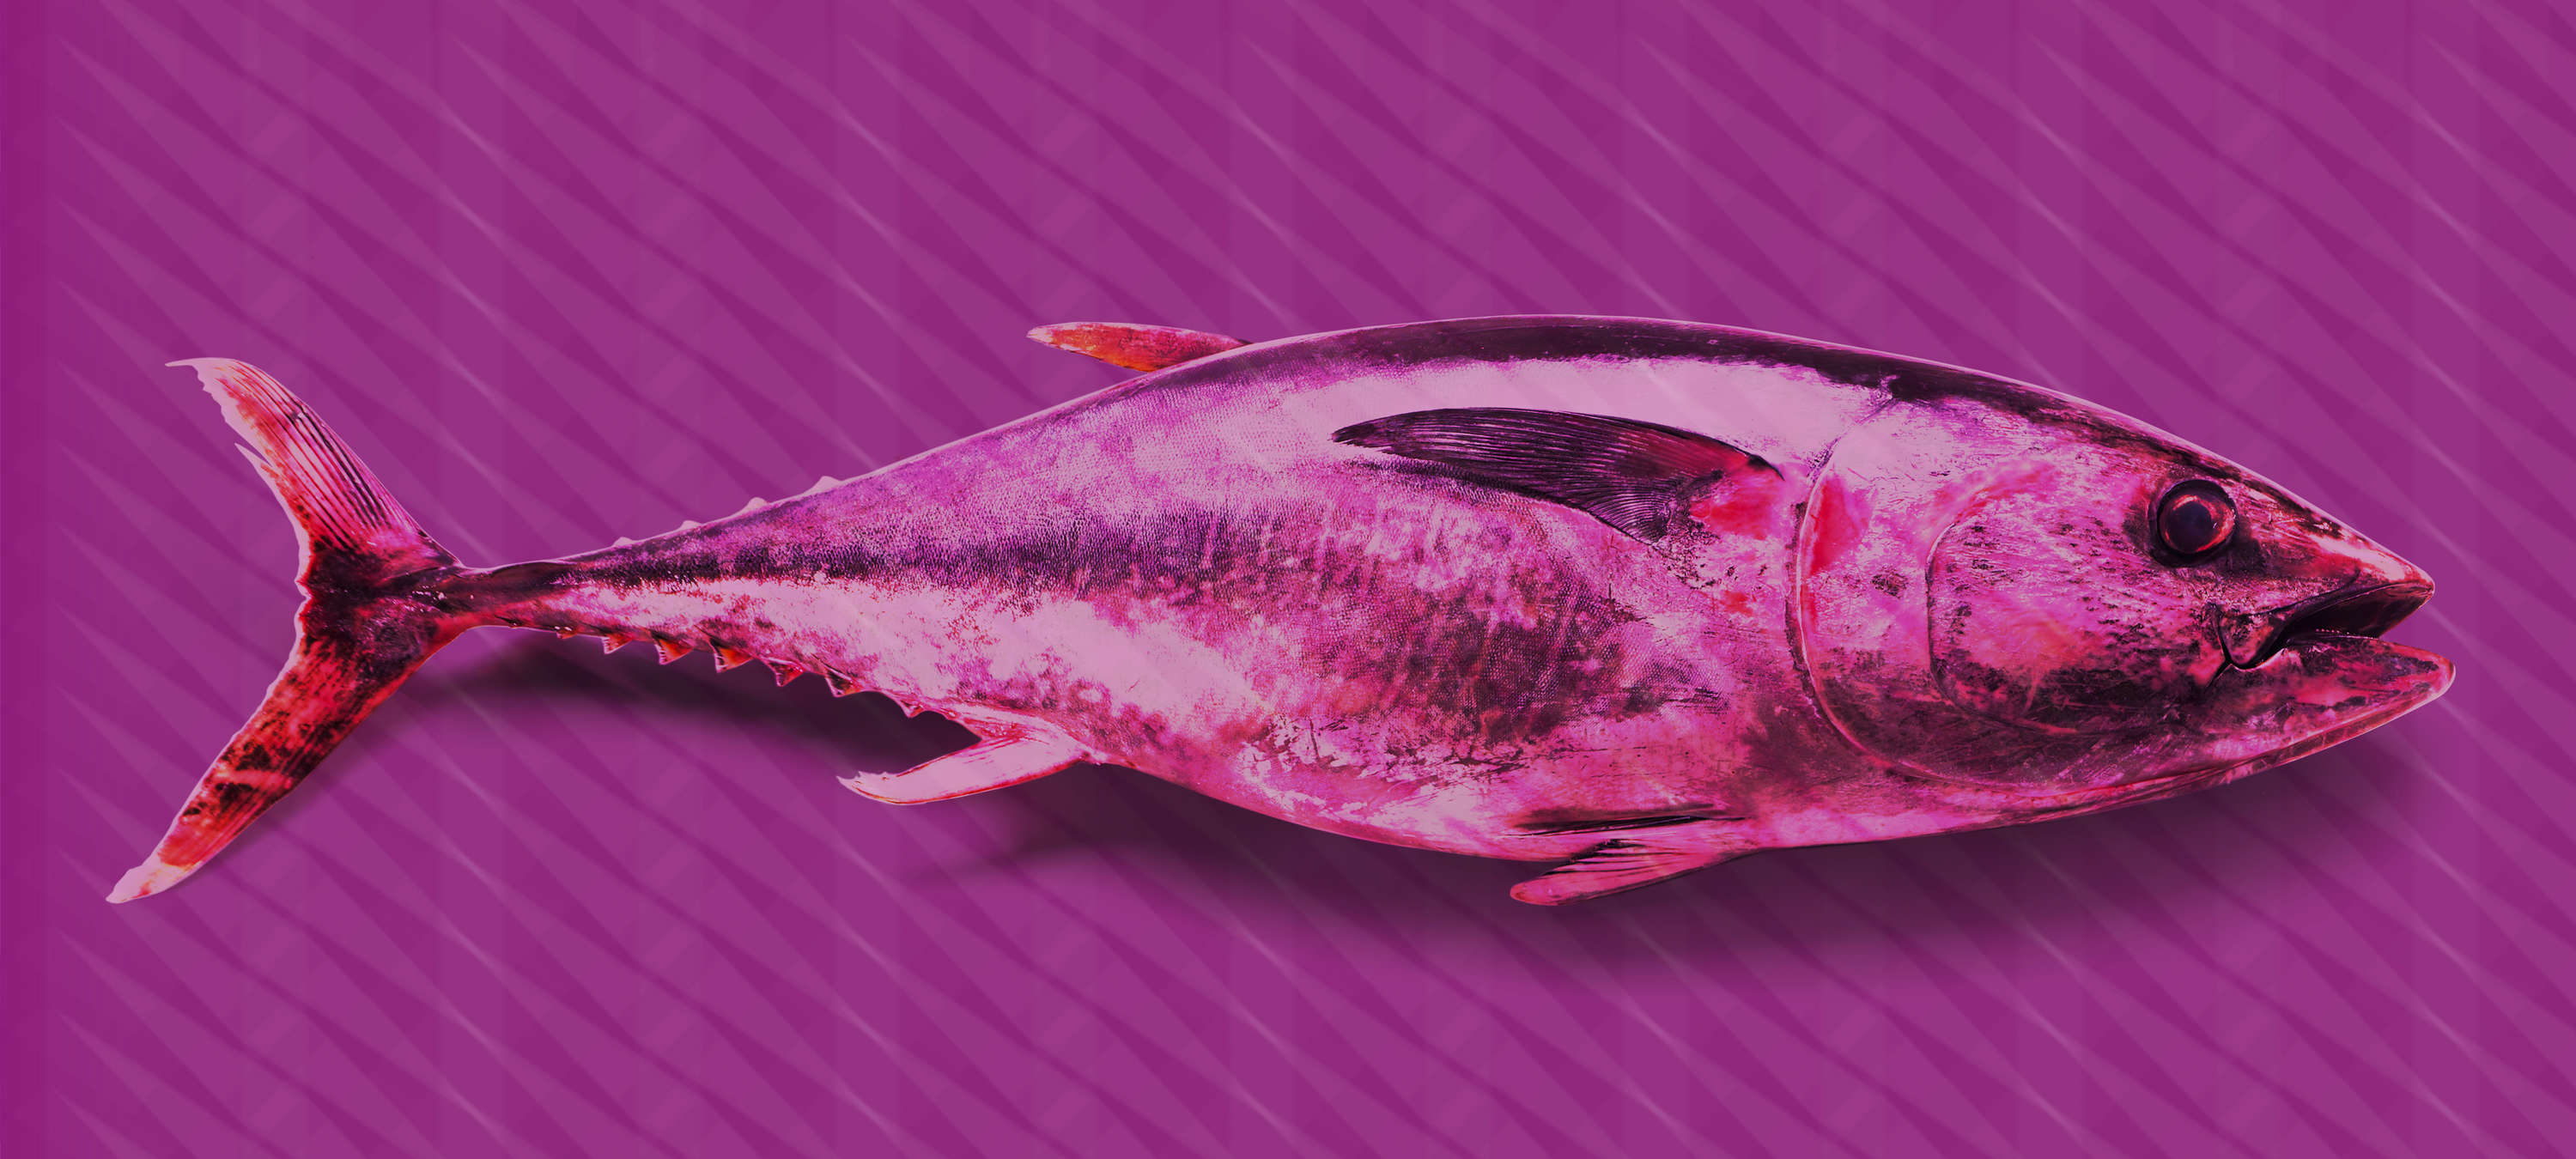             Papel pintable Tuna Pop Art - Violeta, Rosa, Rojo - Material sin tejer texturado
        